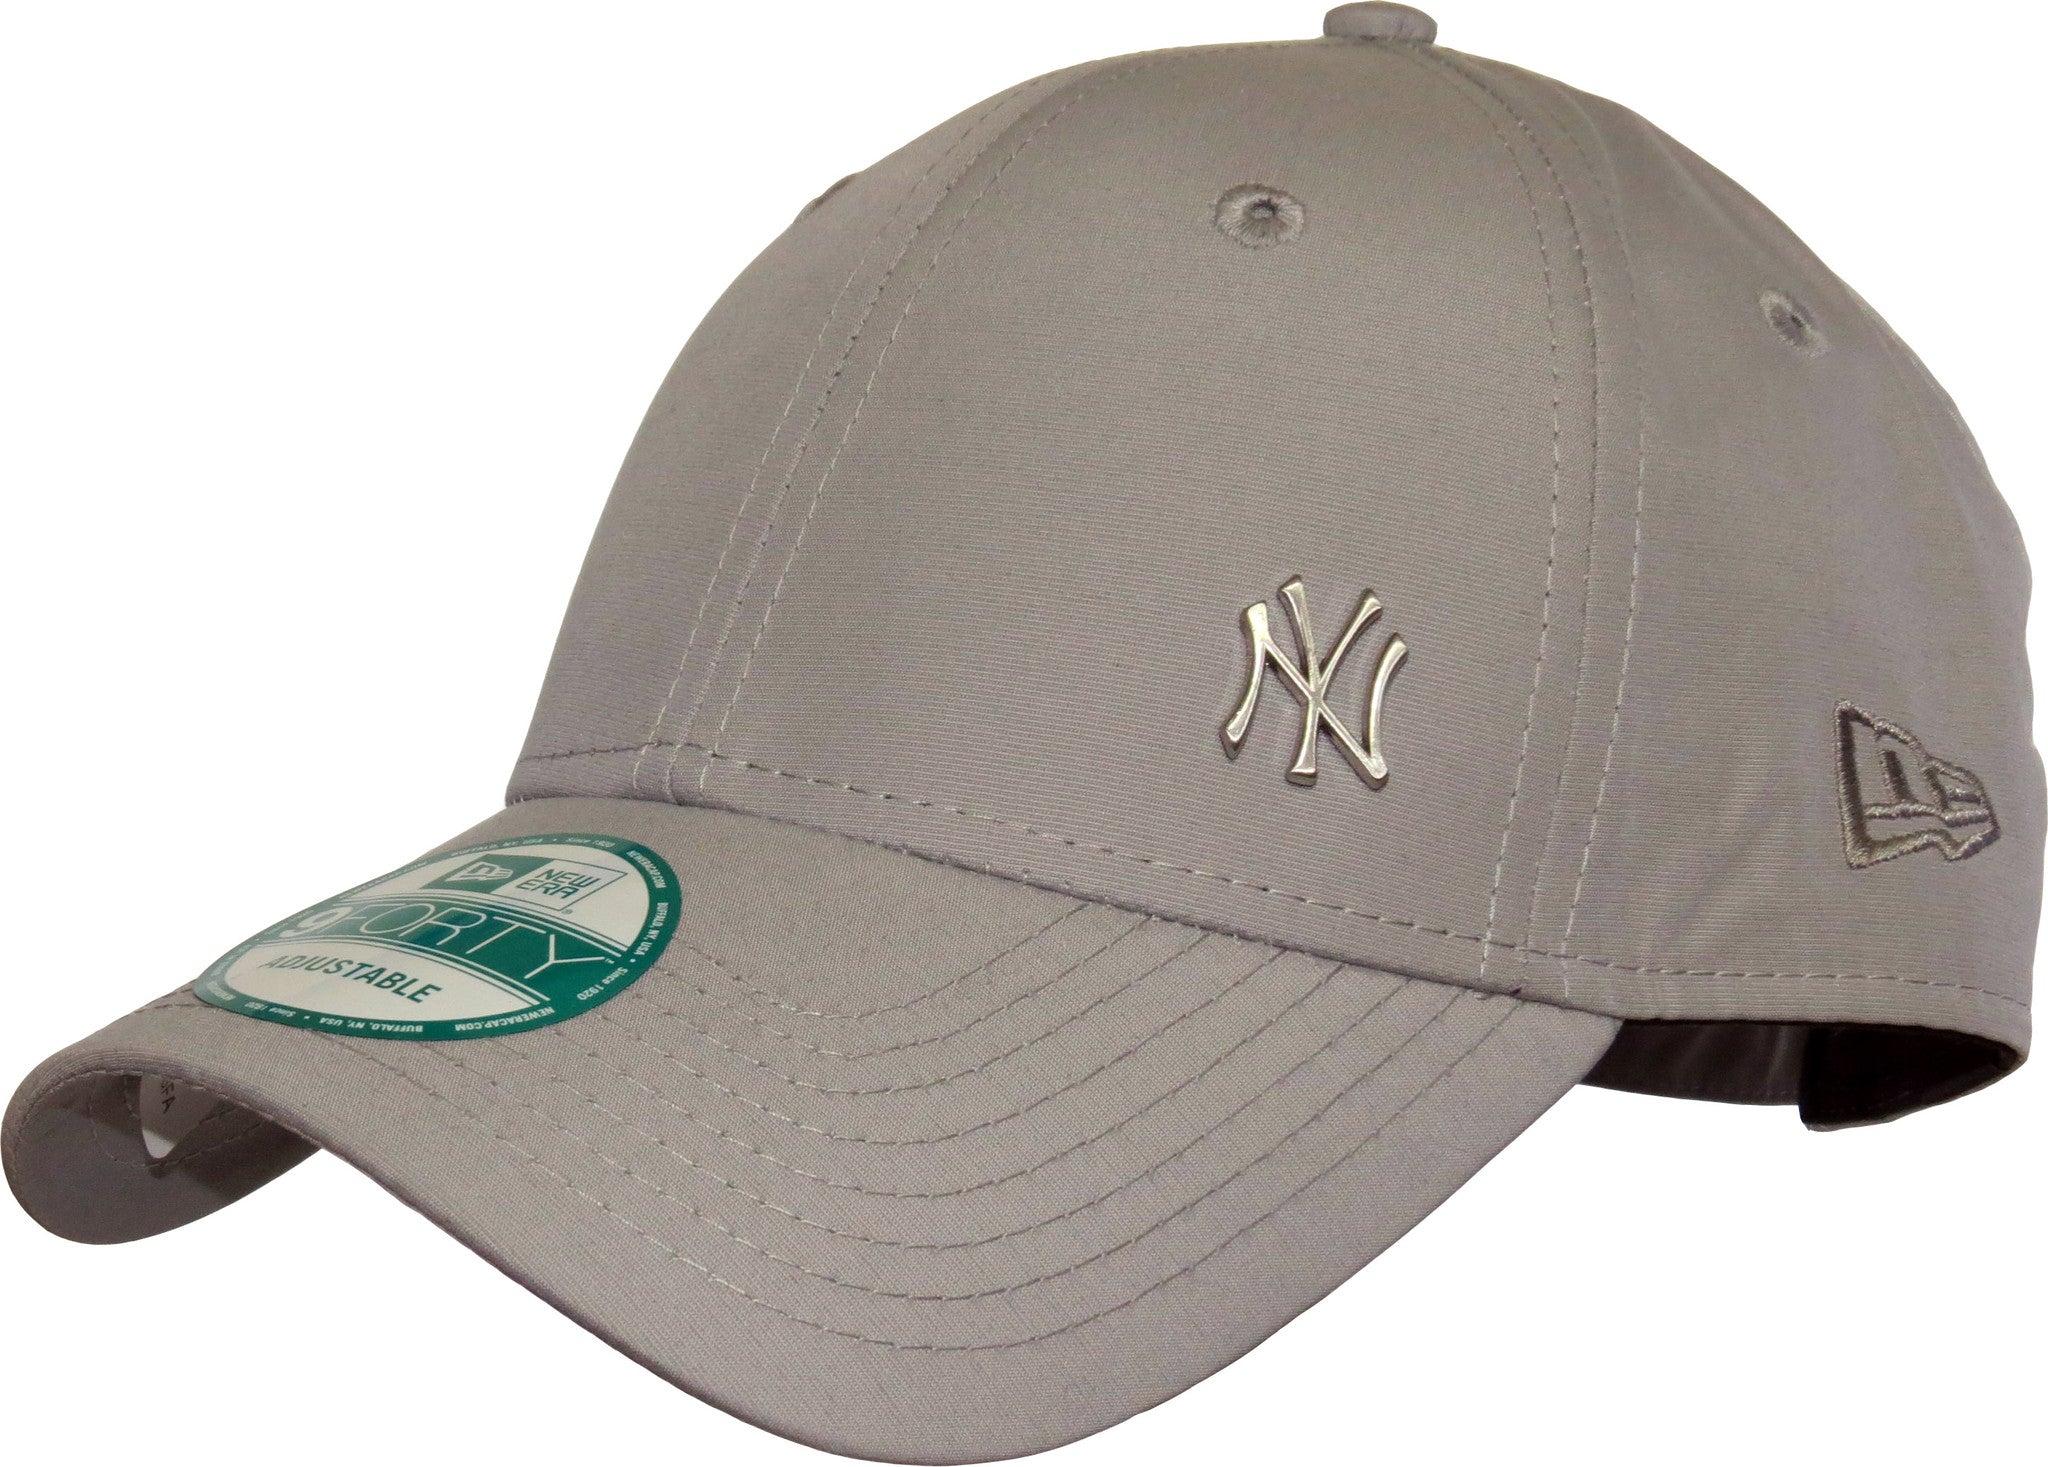 Caps New Era Cap 9Forty Mlb League Basic New York Yankees Black/ White